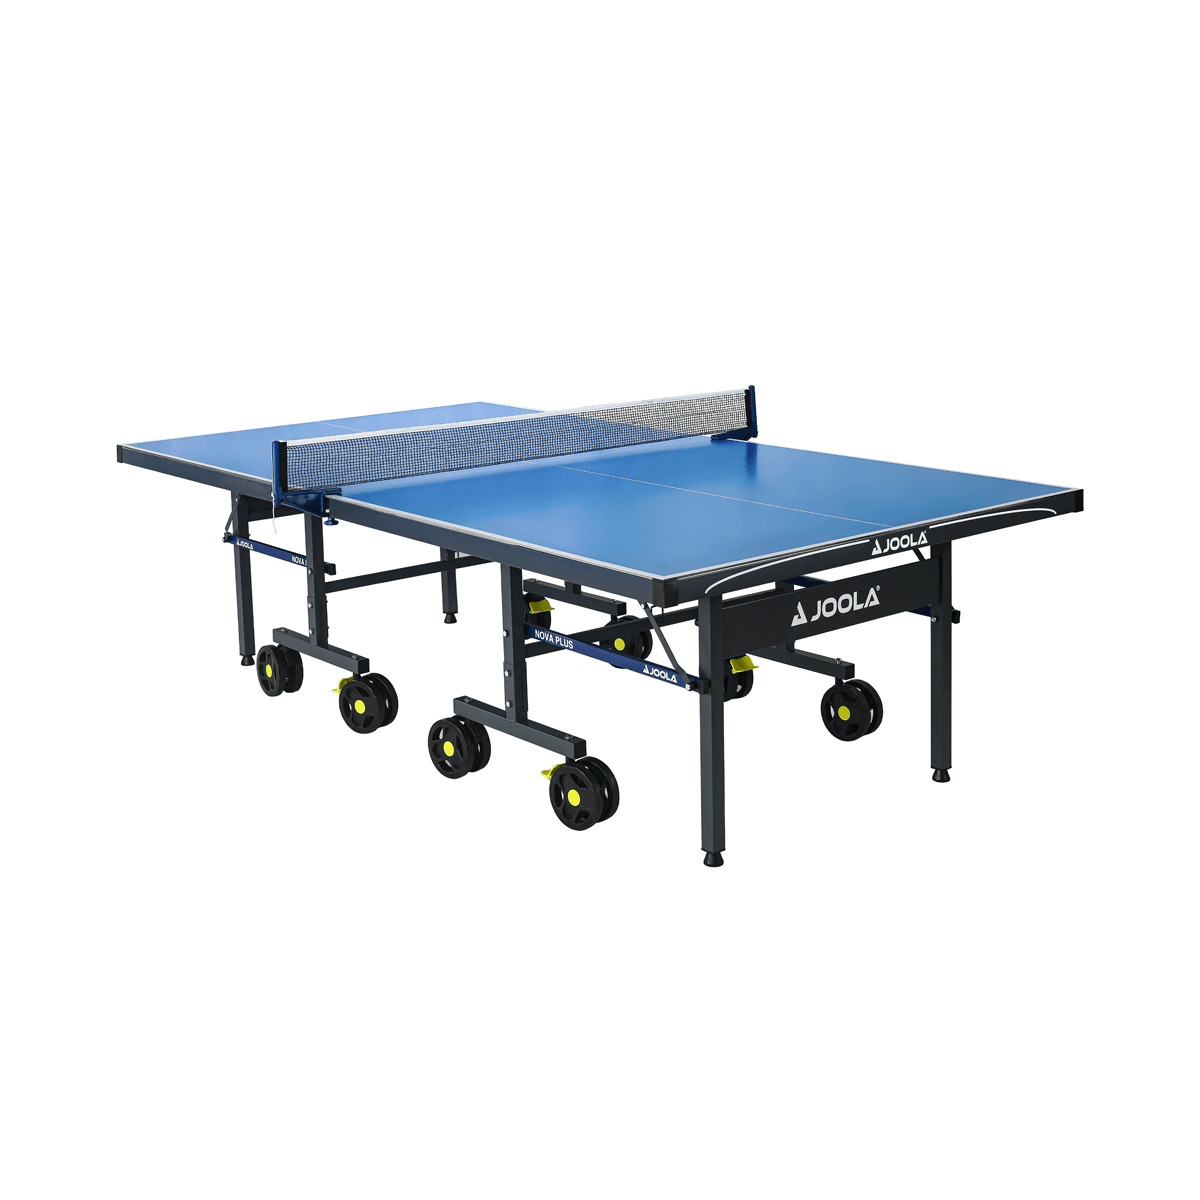 JOOLA NOVA Pro - Outdoor Table Tennis Table